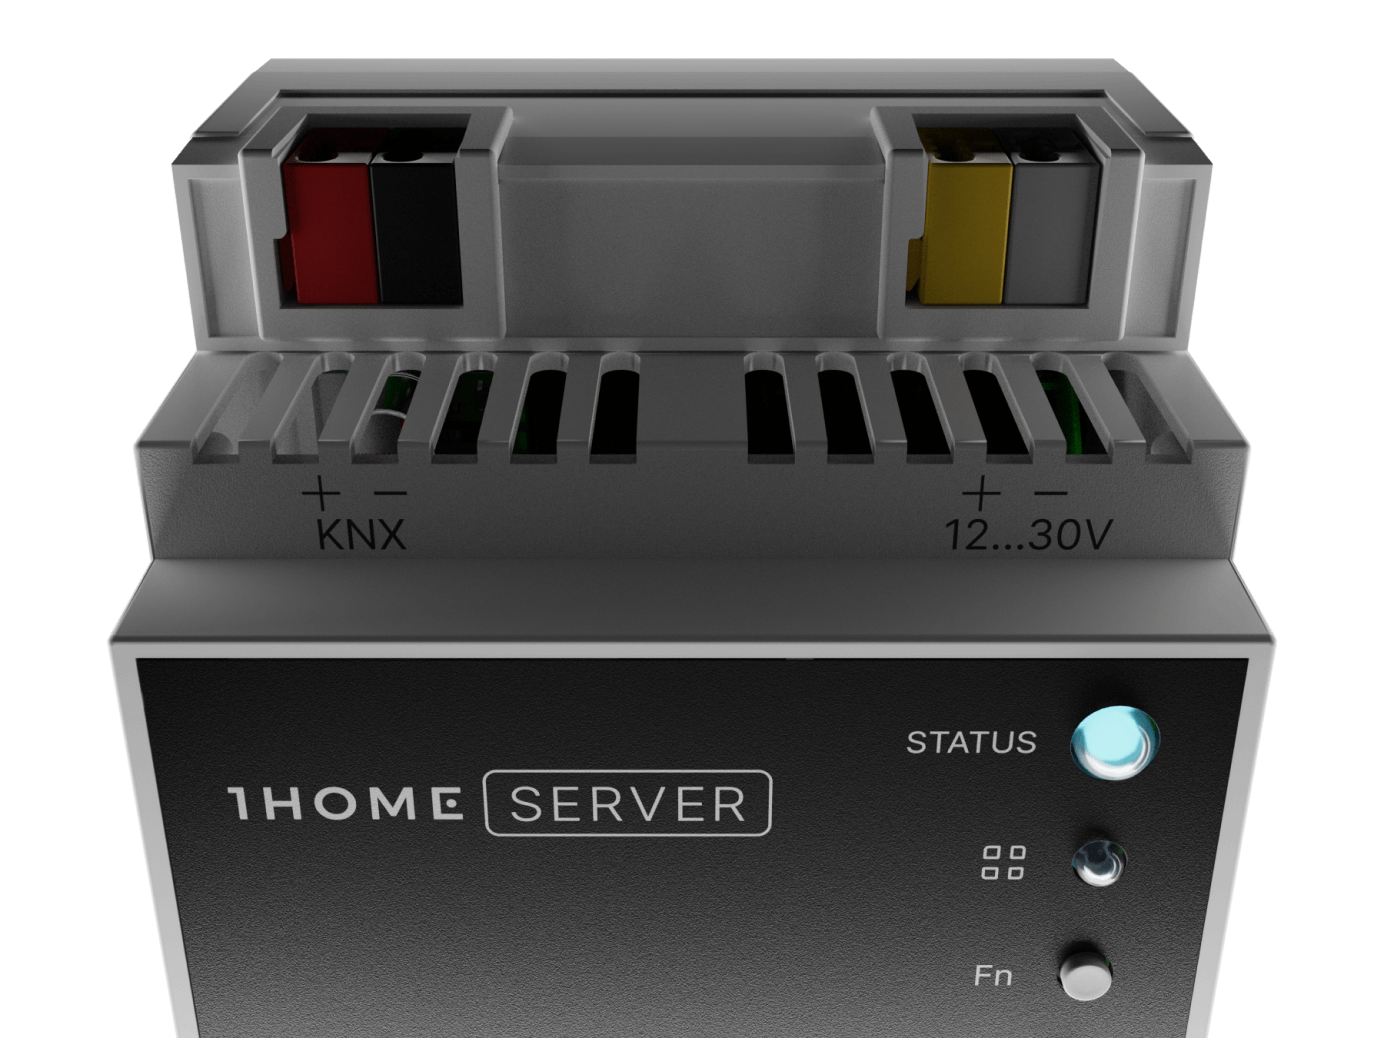 Meet 1Home Server for KNX